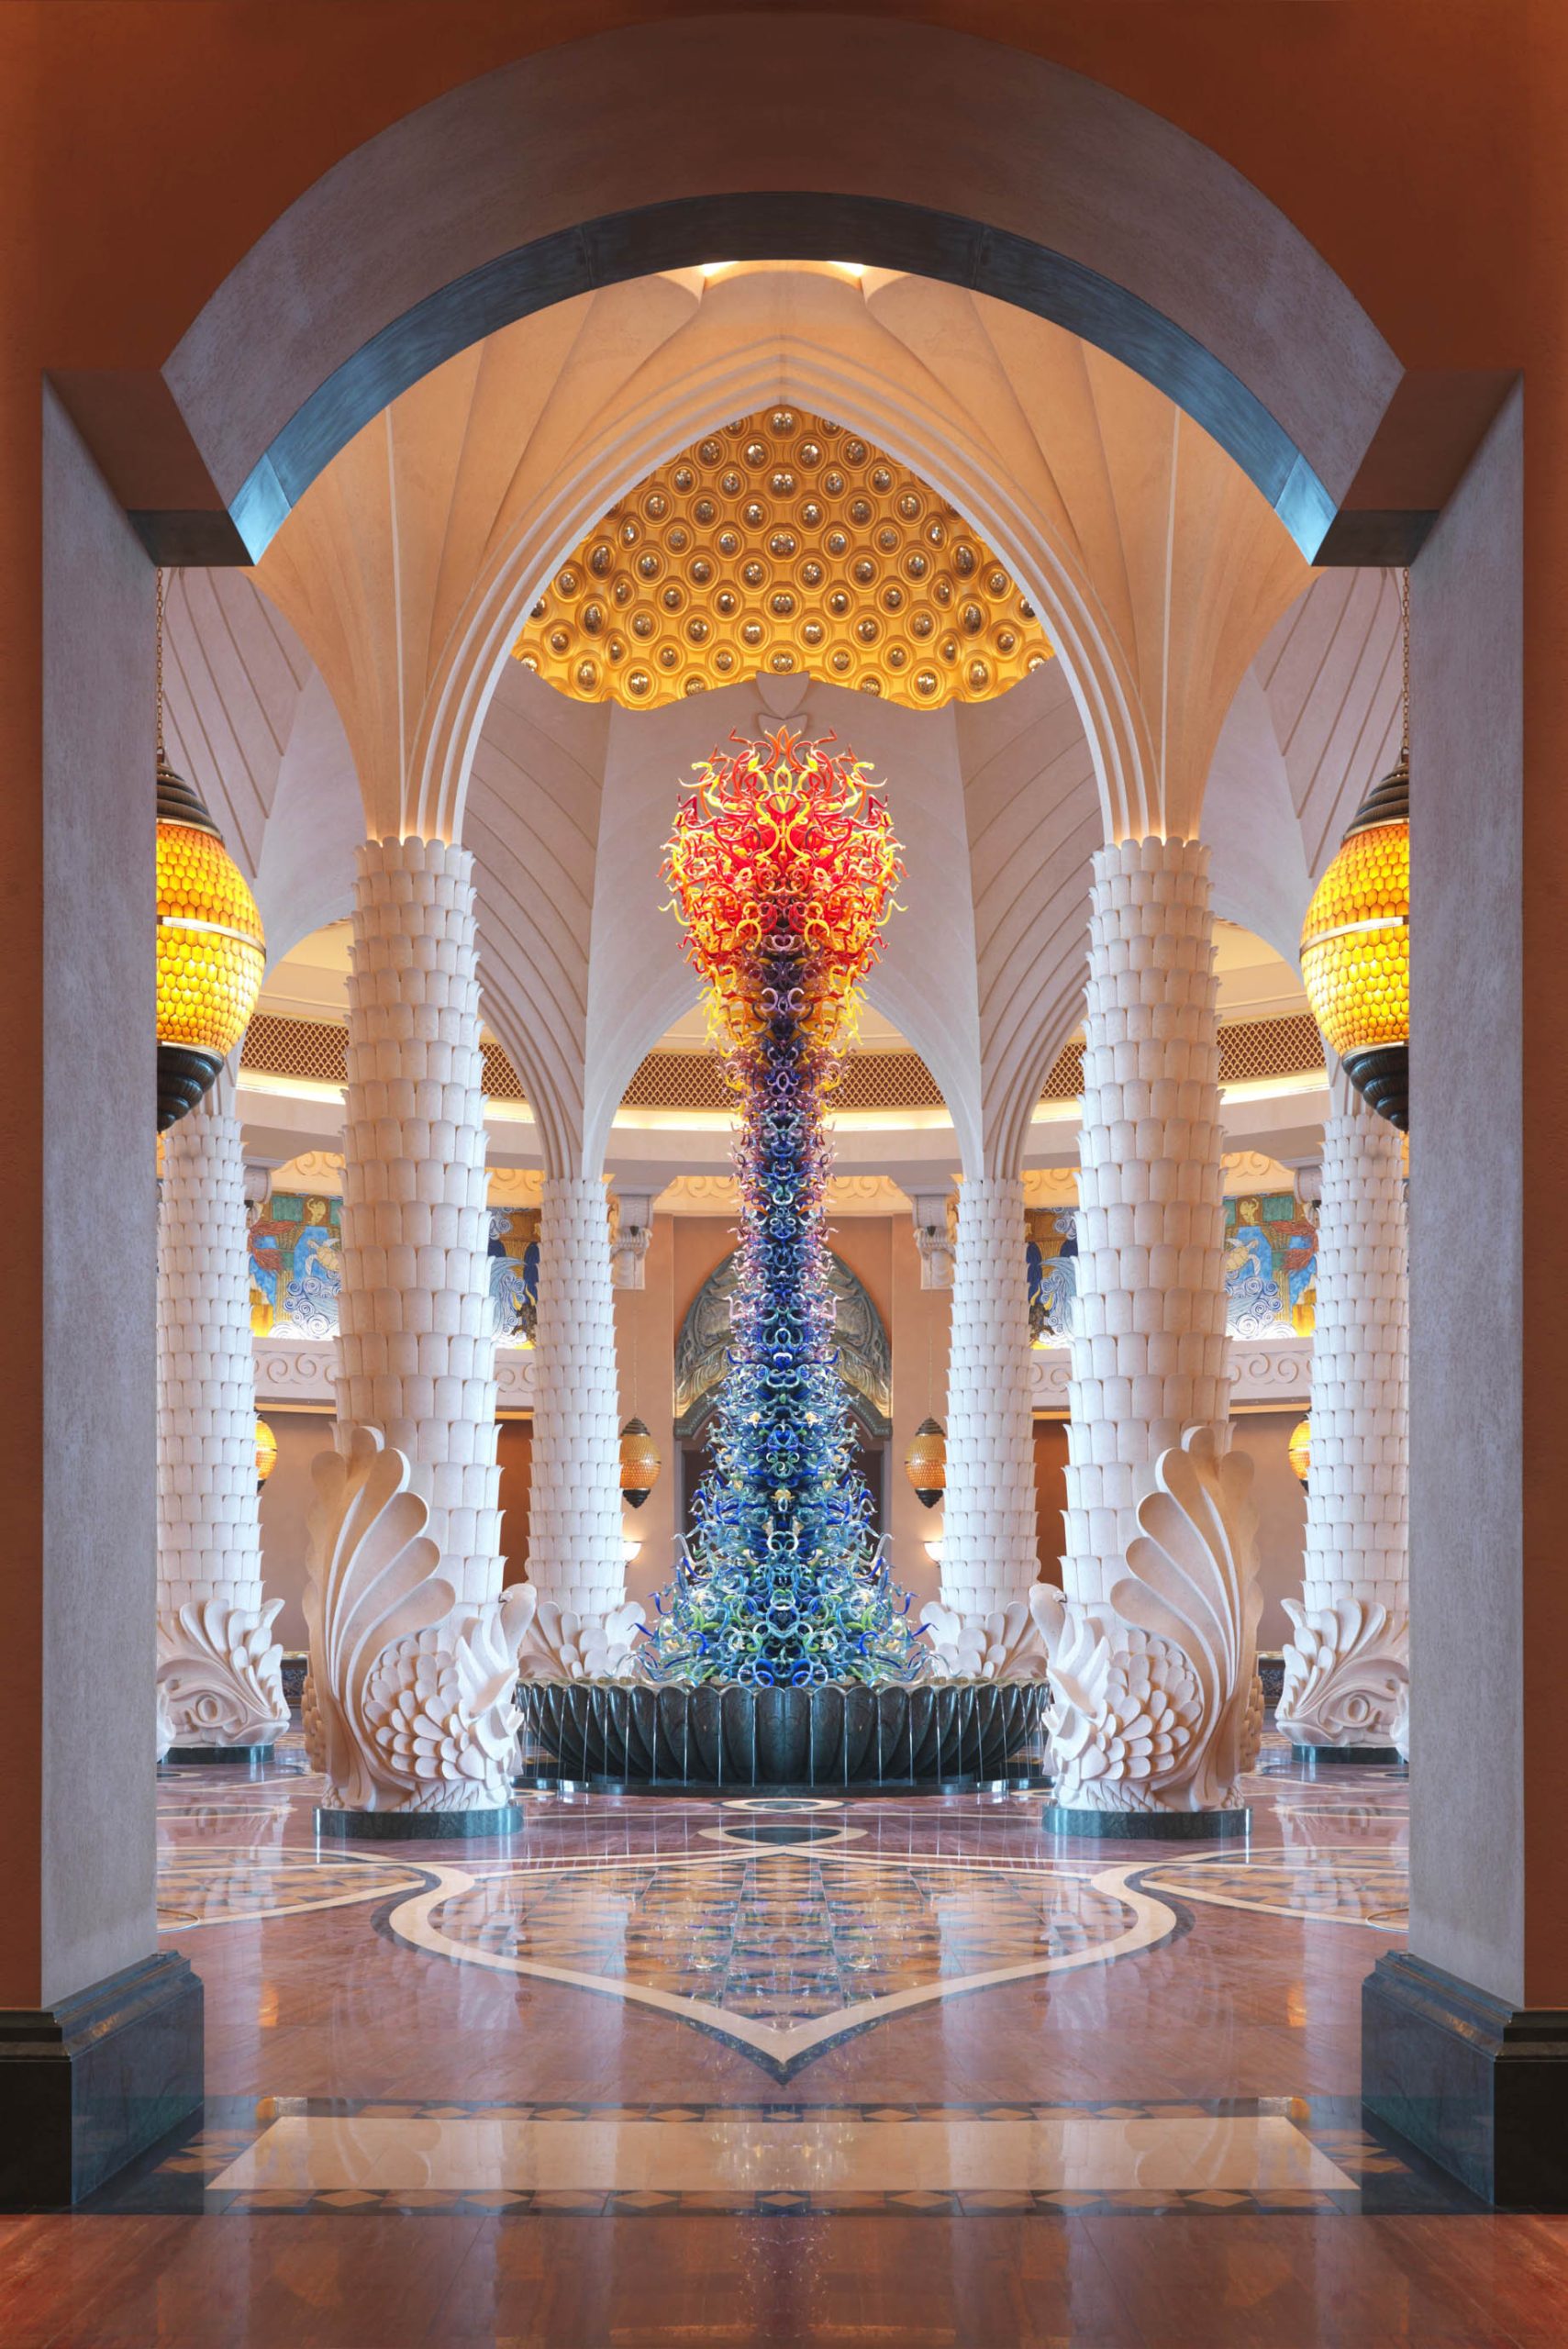 Atlantis The Palm Resort - Crescent Rd, Dubai, UAE - Arrival Lobby